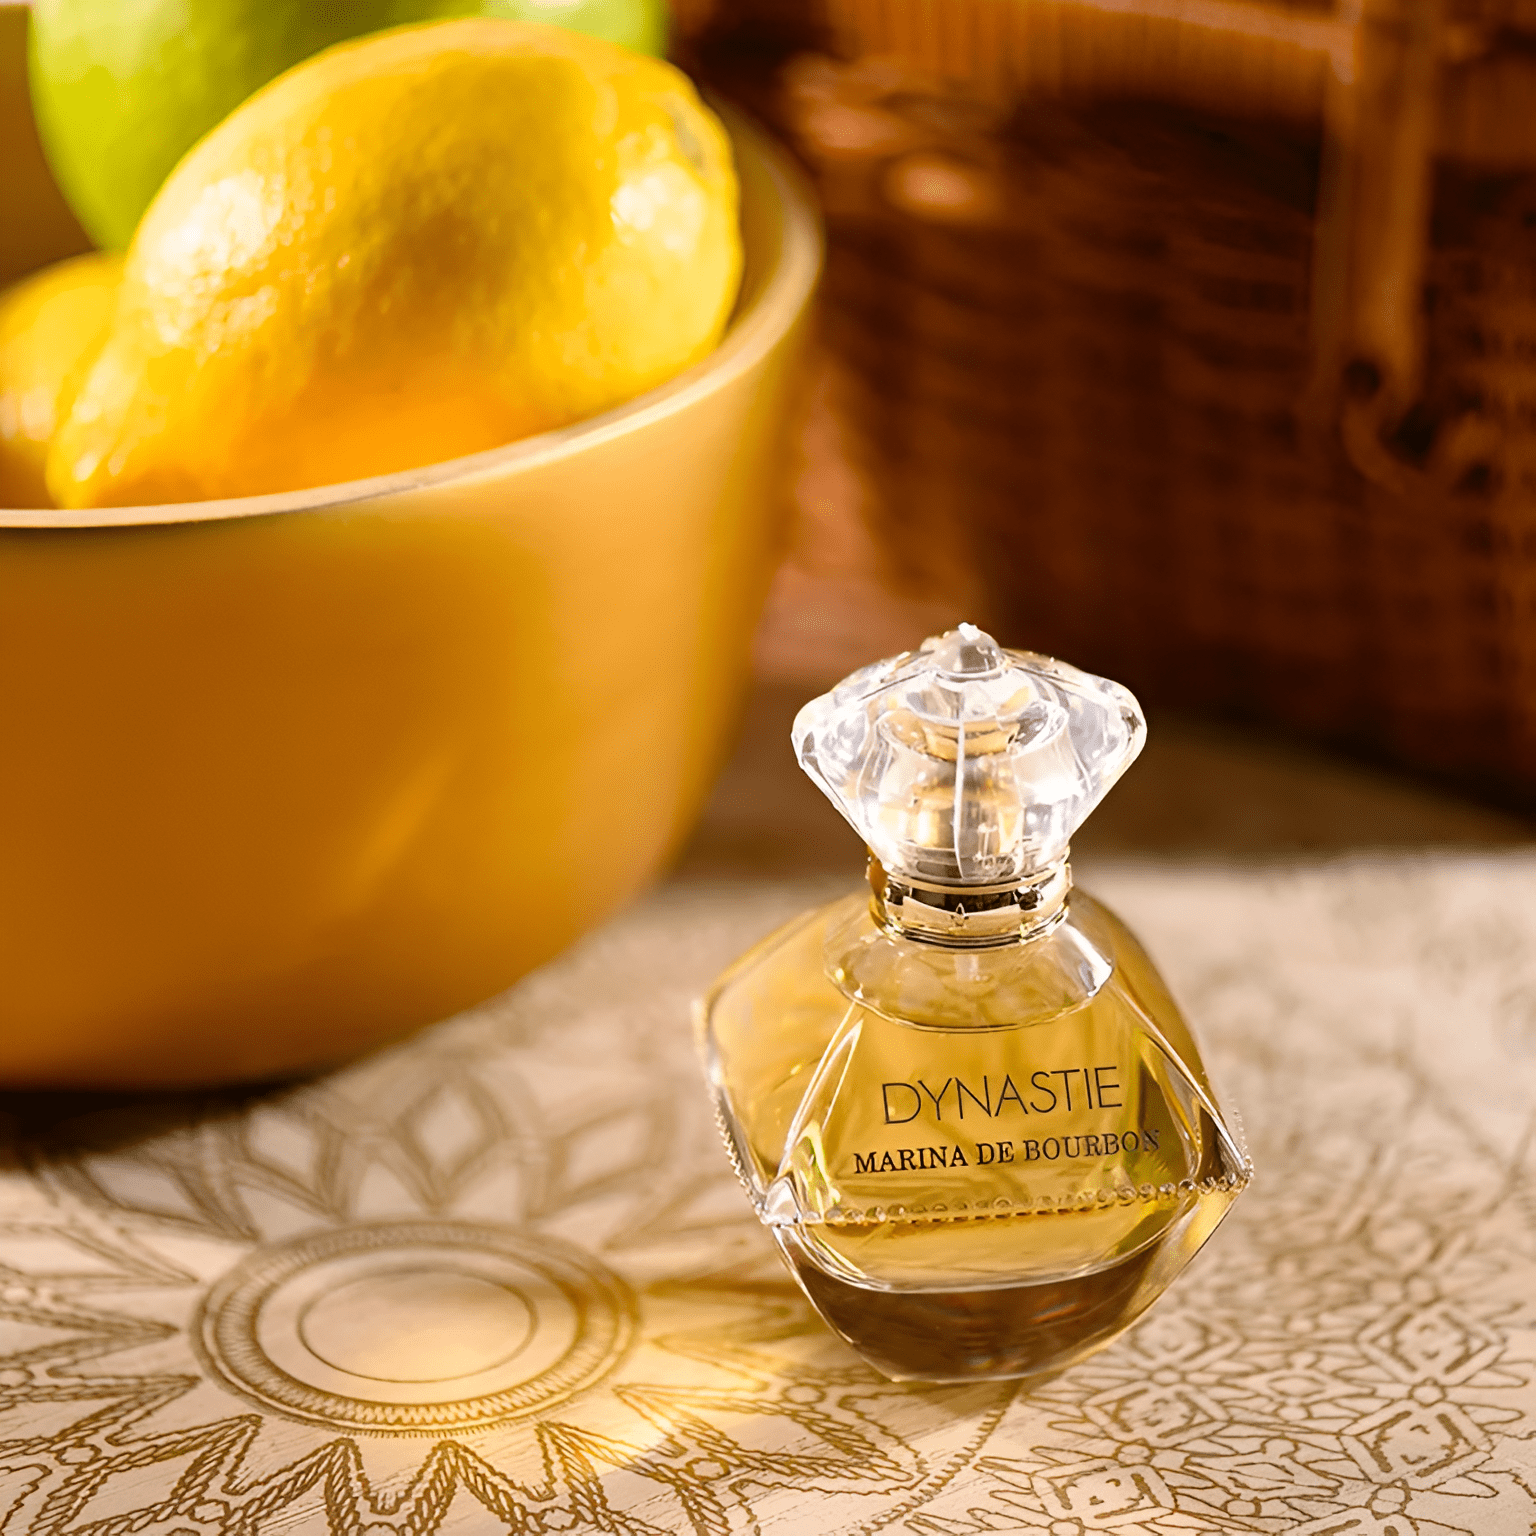 Marina De Bourbon Miniature Collection | My Perfume Shop